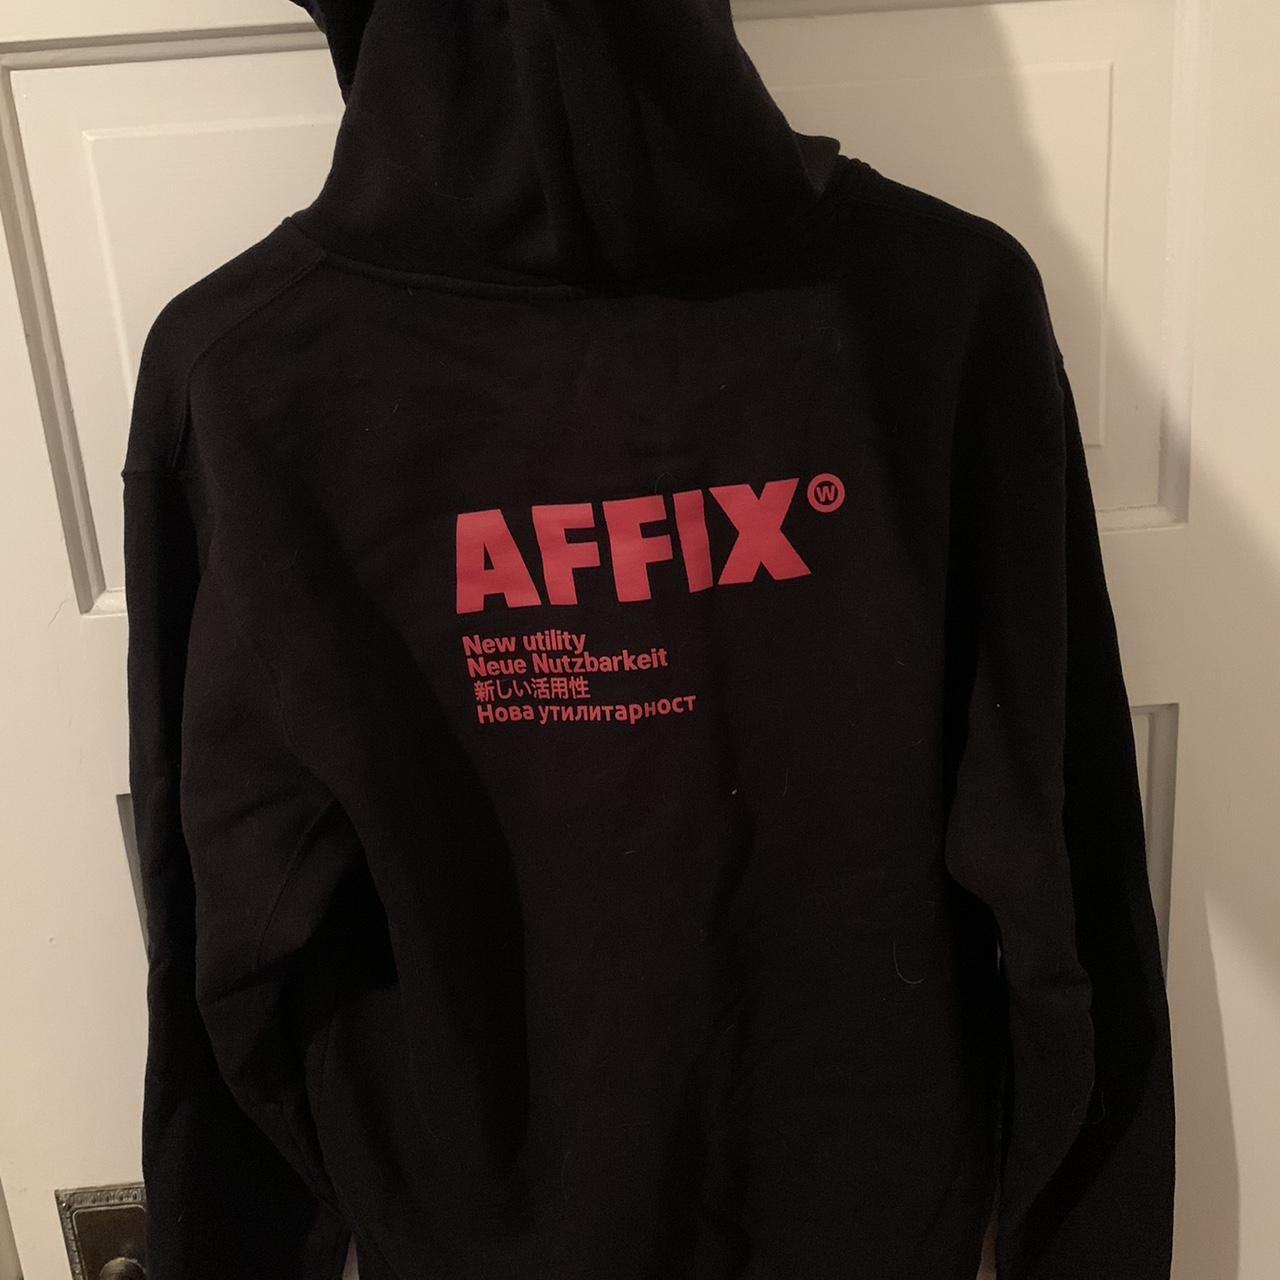 Affix Men's Black and Red Sweatshirt (3)